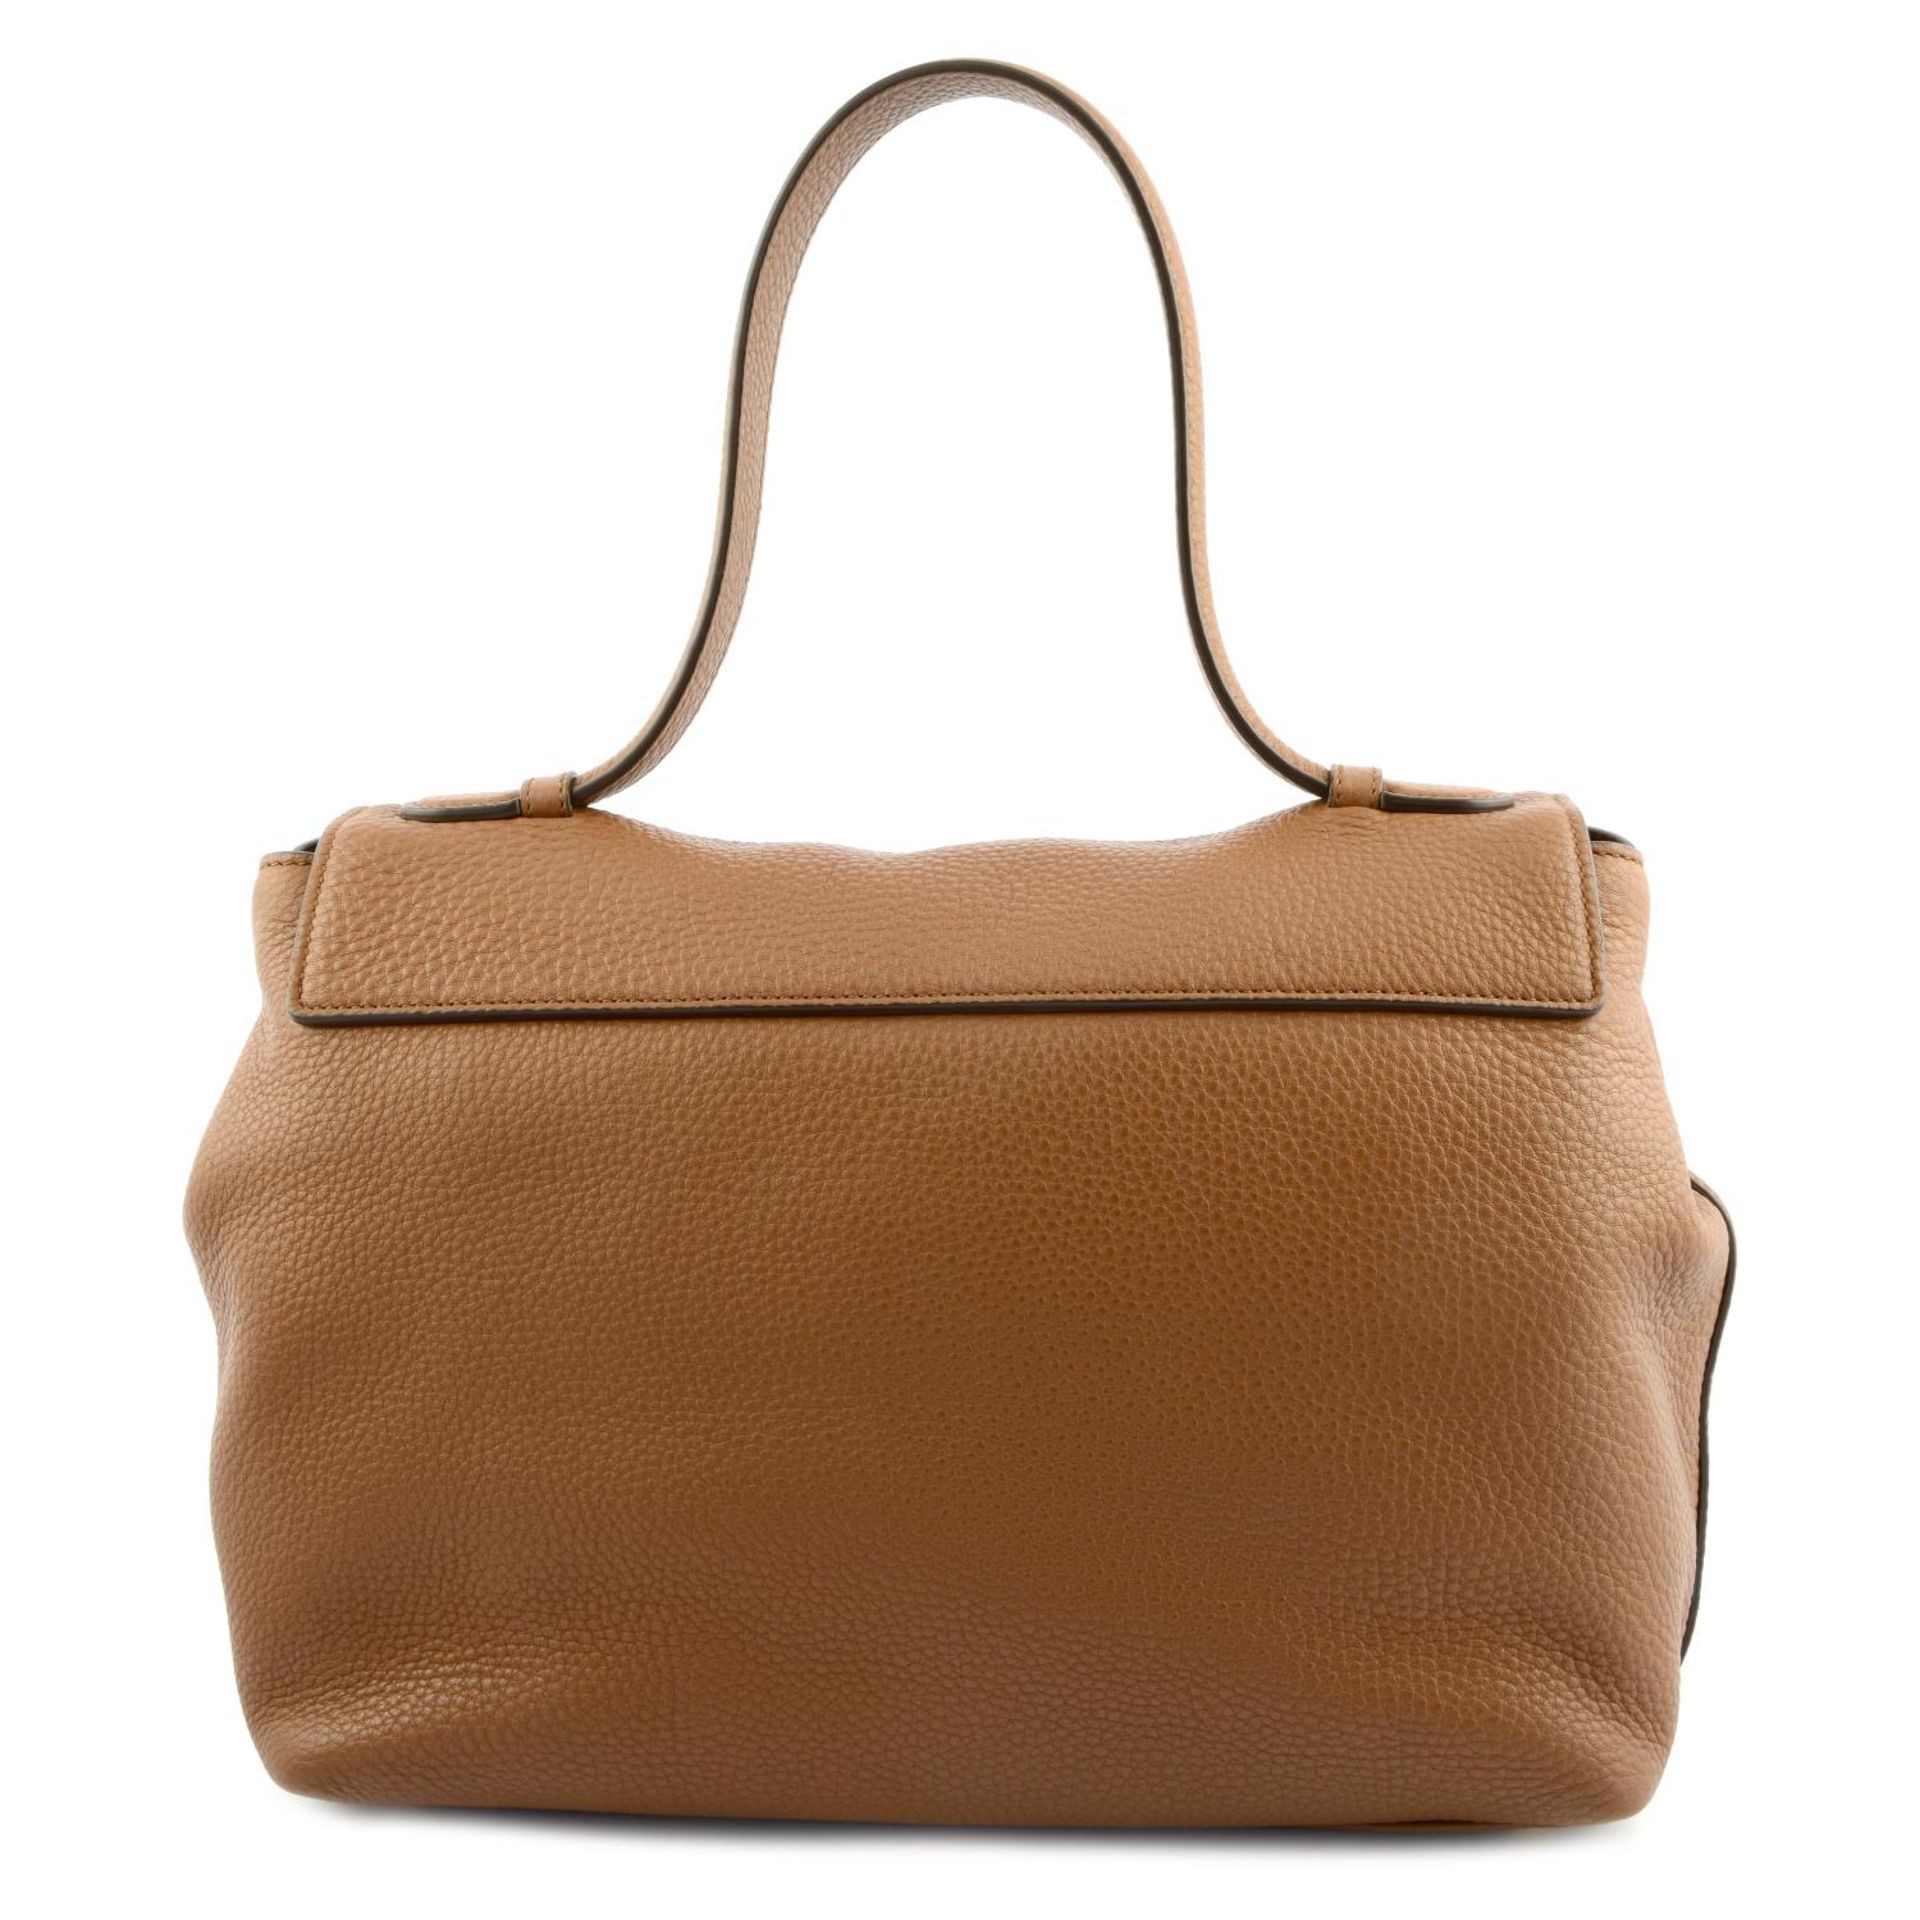 MIU MIU - a Vitello tan leather handbag. - Bild 2 aus 4